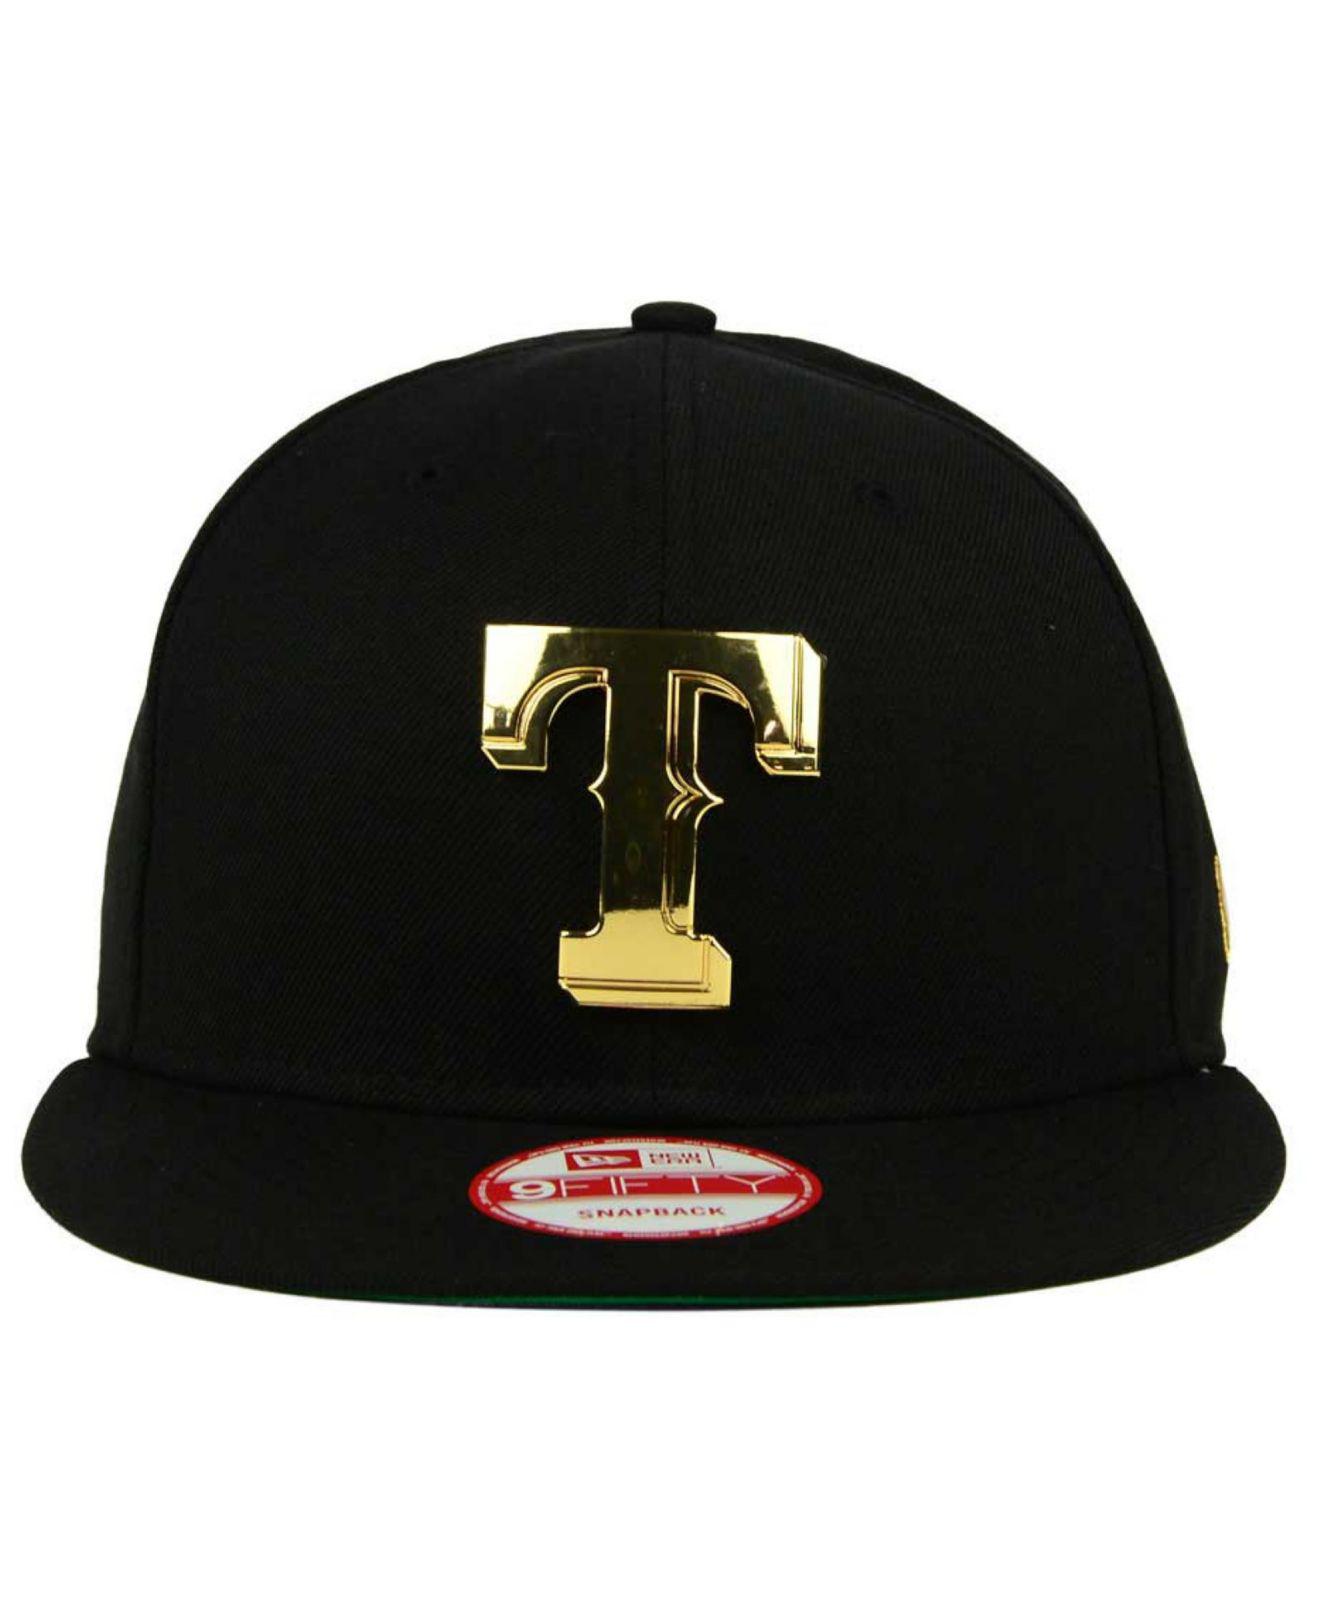 KTZ Texas Rangers Gold 59fifty Cap in Black for Men